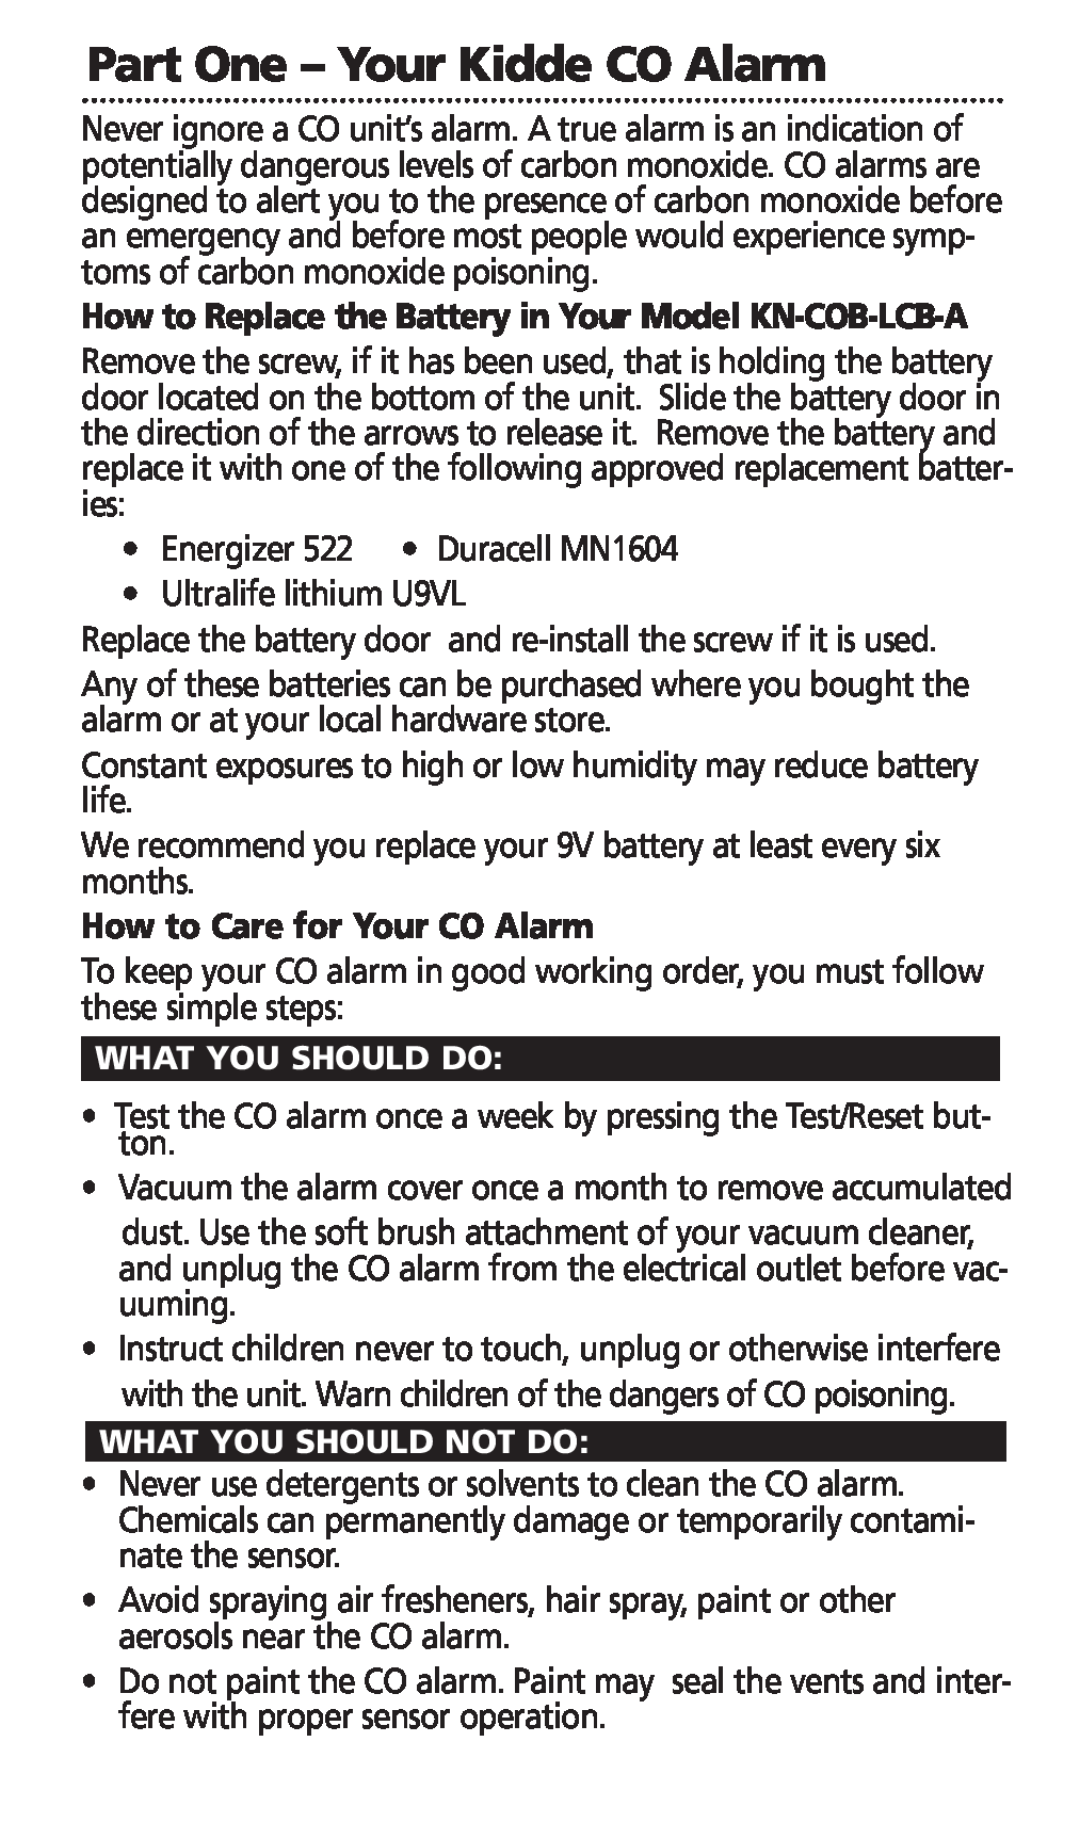 Kidde KN-COB-LCB-A, KN-COB-DP-H manual How to Care for Your CO Alarm, Part One - Your Kidde CO Alarm 